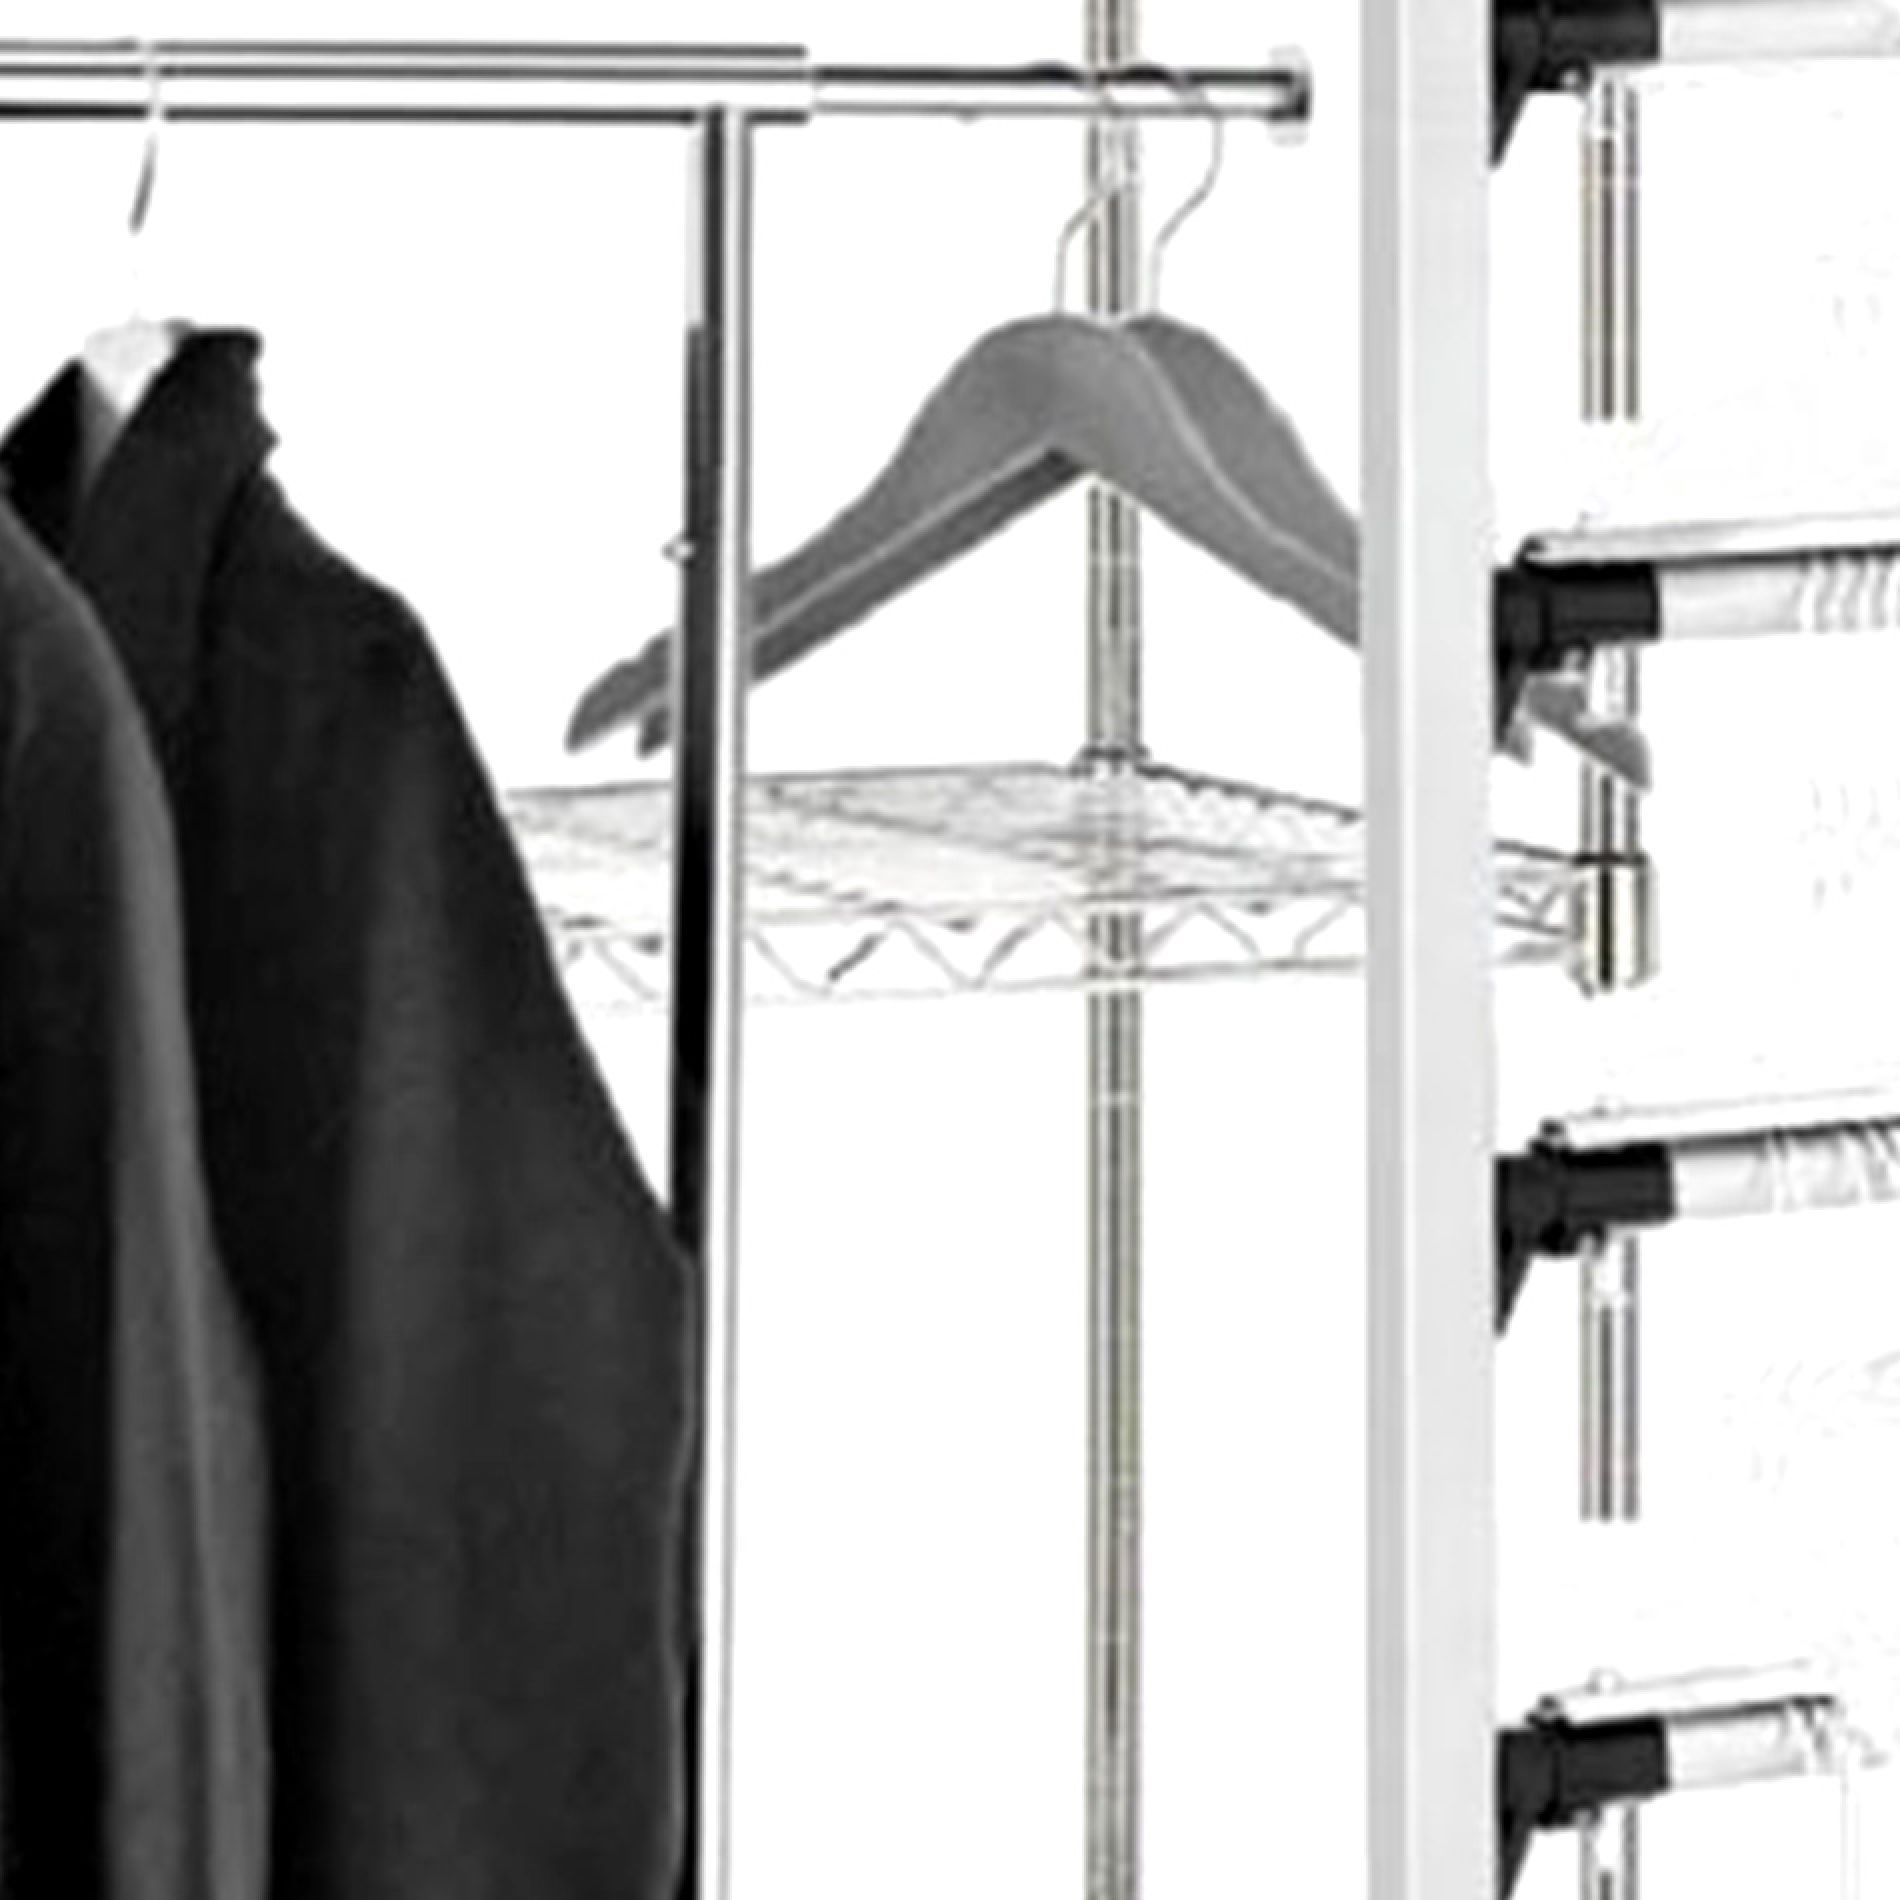 Clothing Racks Gallery Image